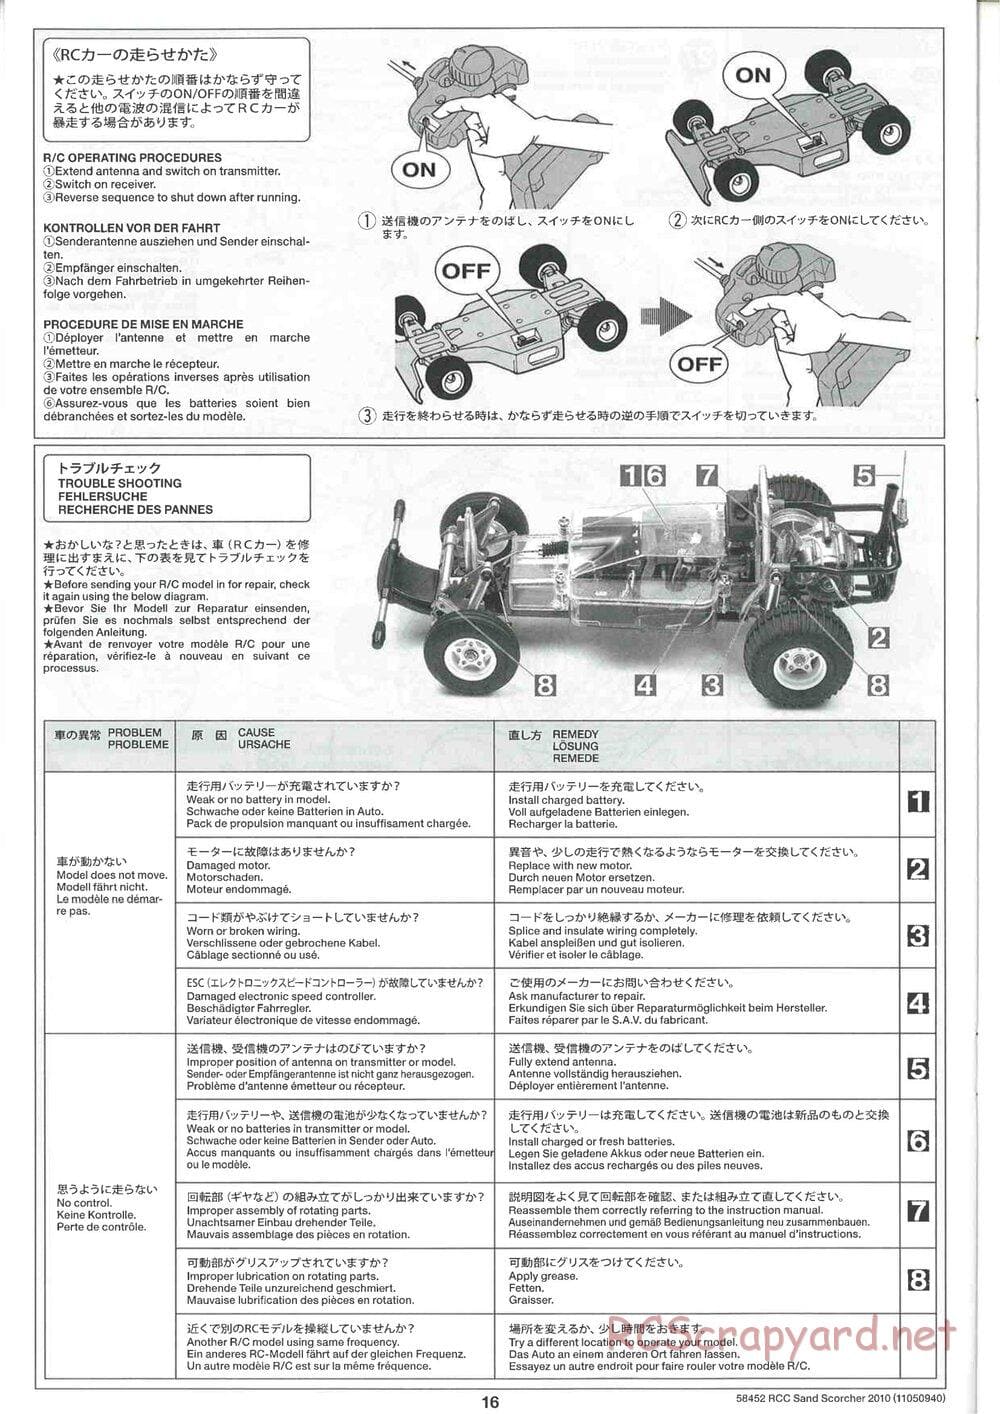 Tamiya - Sand Scorcher 2010 - SRB v1 Chassis - Manual - Page 16